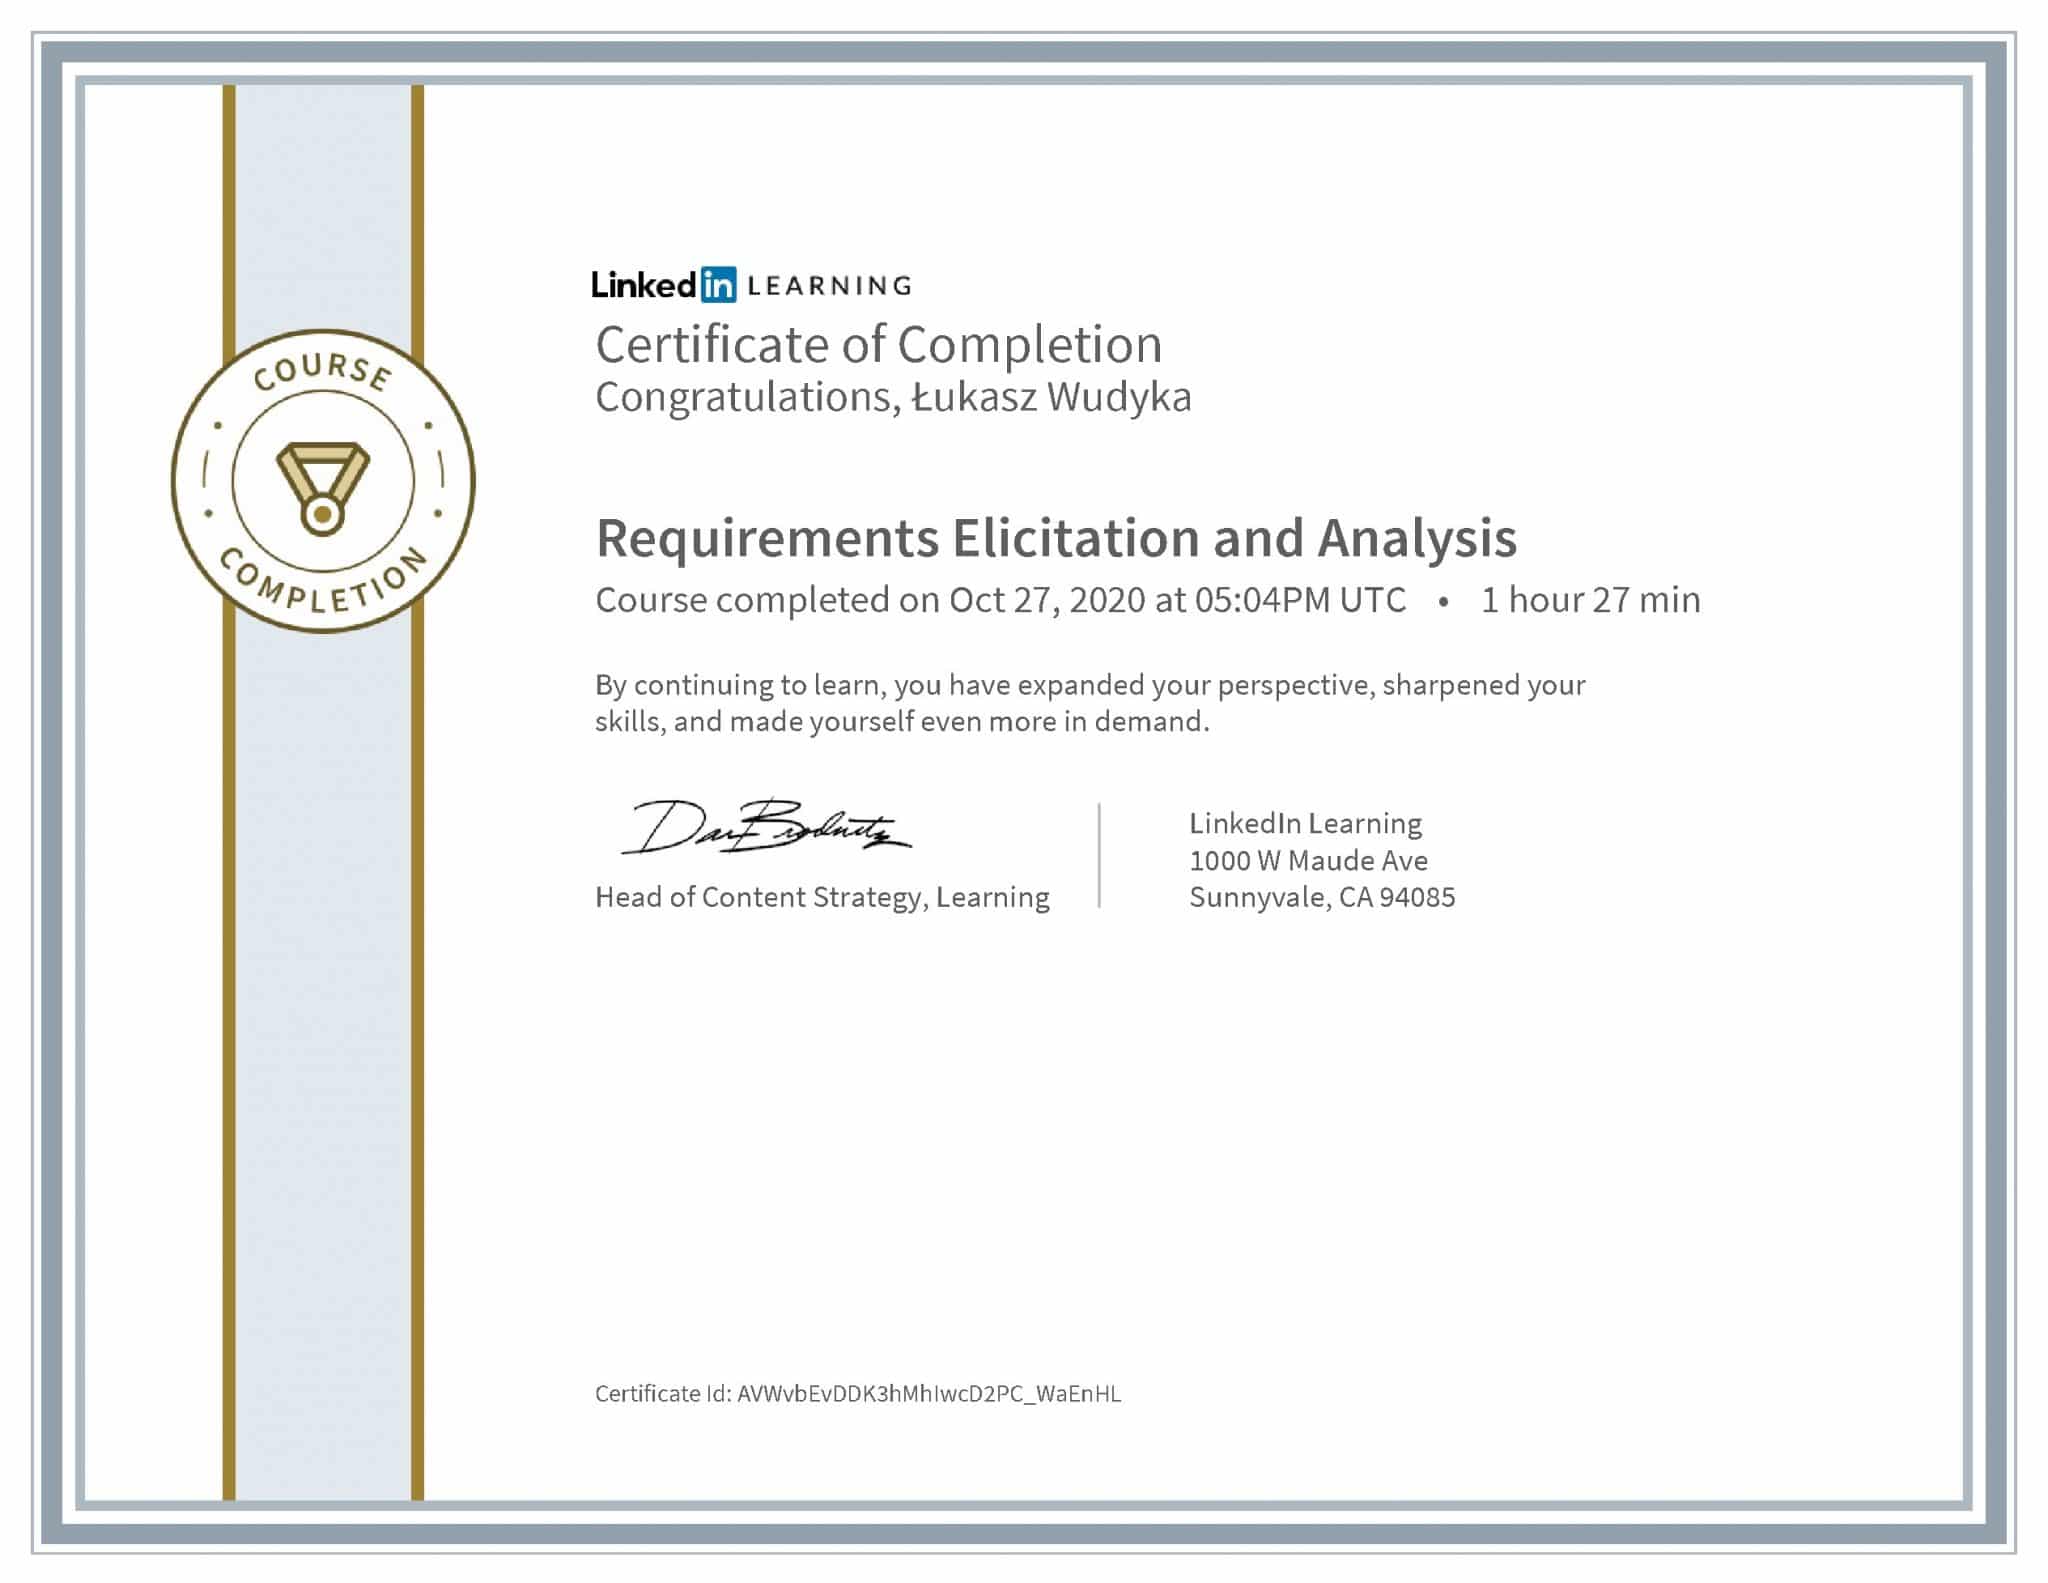 Łukasz Wudyka certyfikat LinkedIn Requirements Elicitation and Analysis